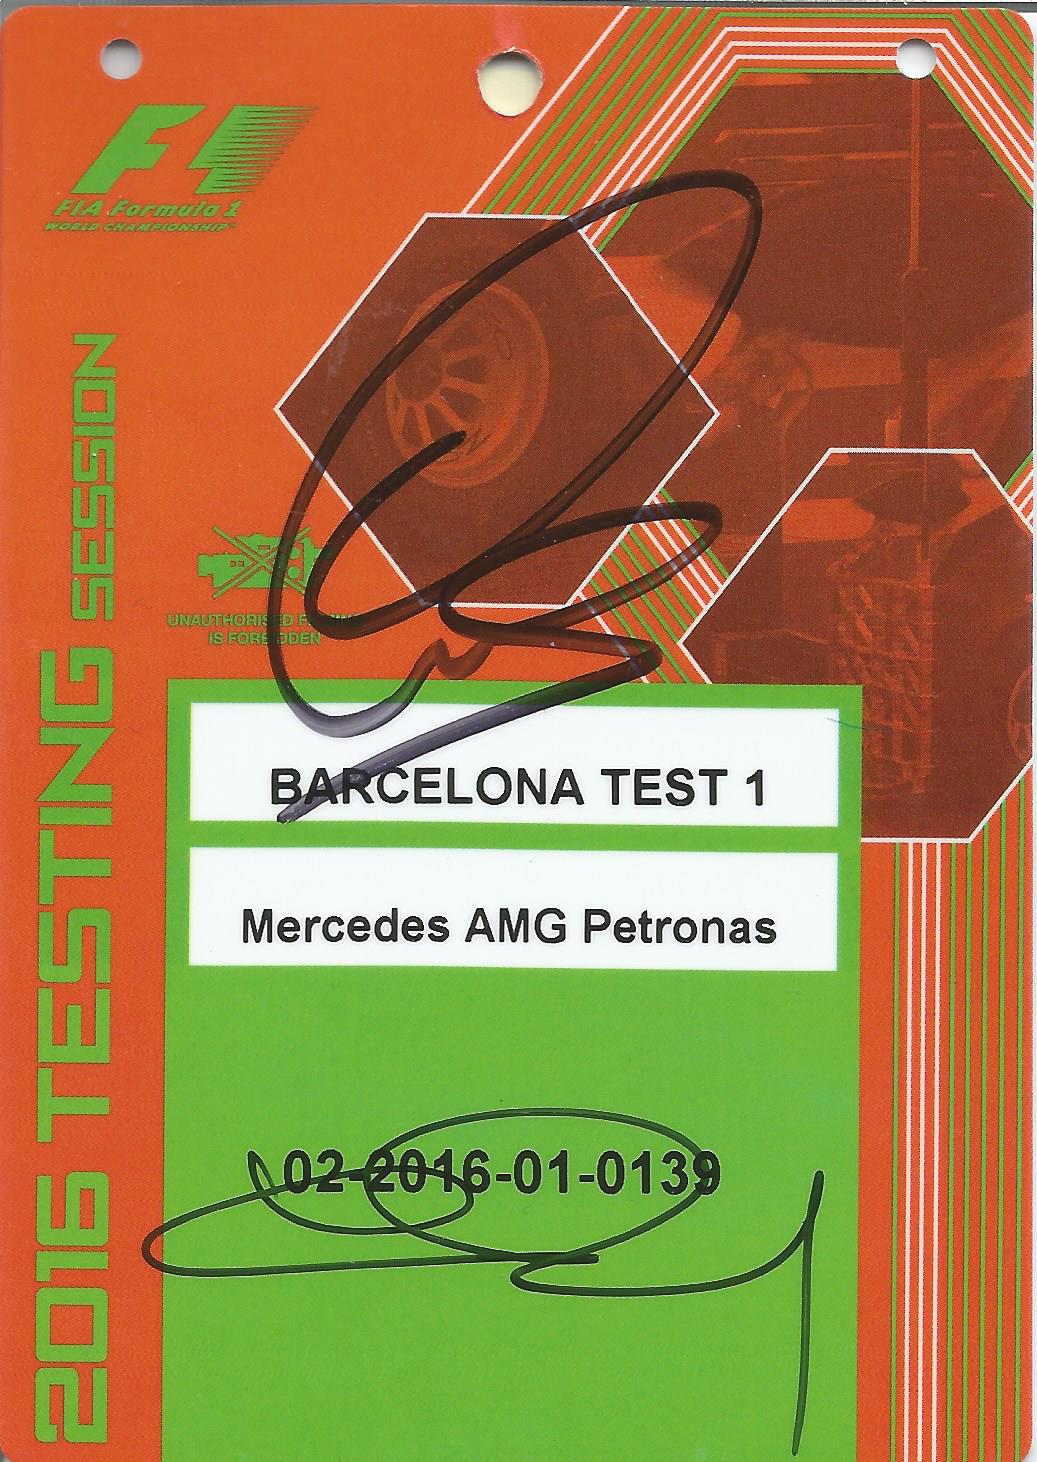 Lewis Hamilton and Nico Rosberg signed Barcelona 2016 Testing Mercedes AMG Petronas pit lane pass.